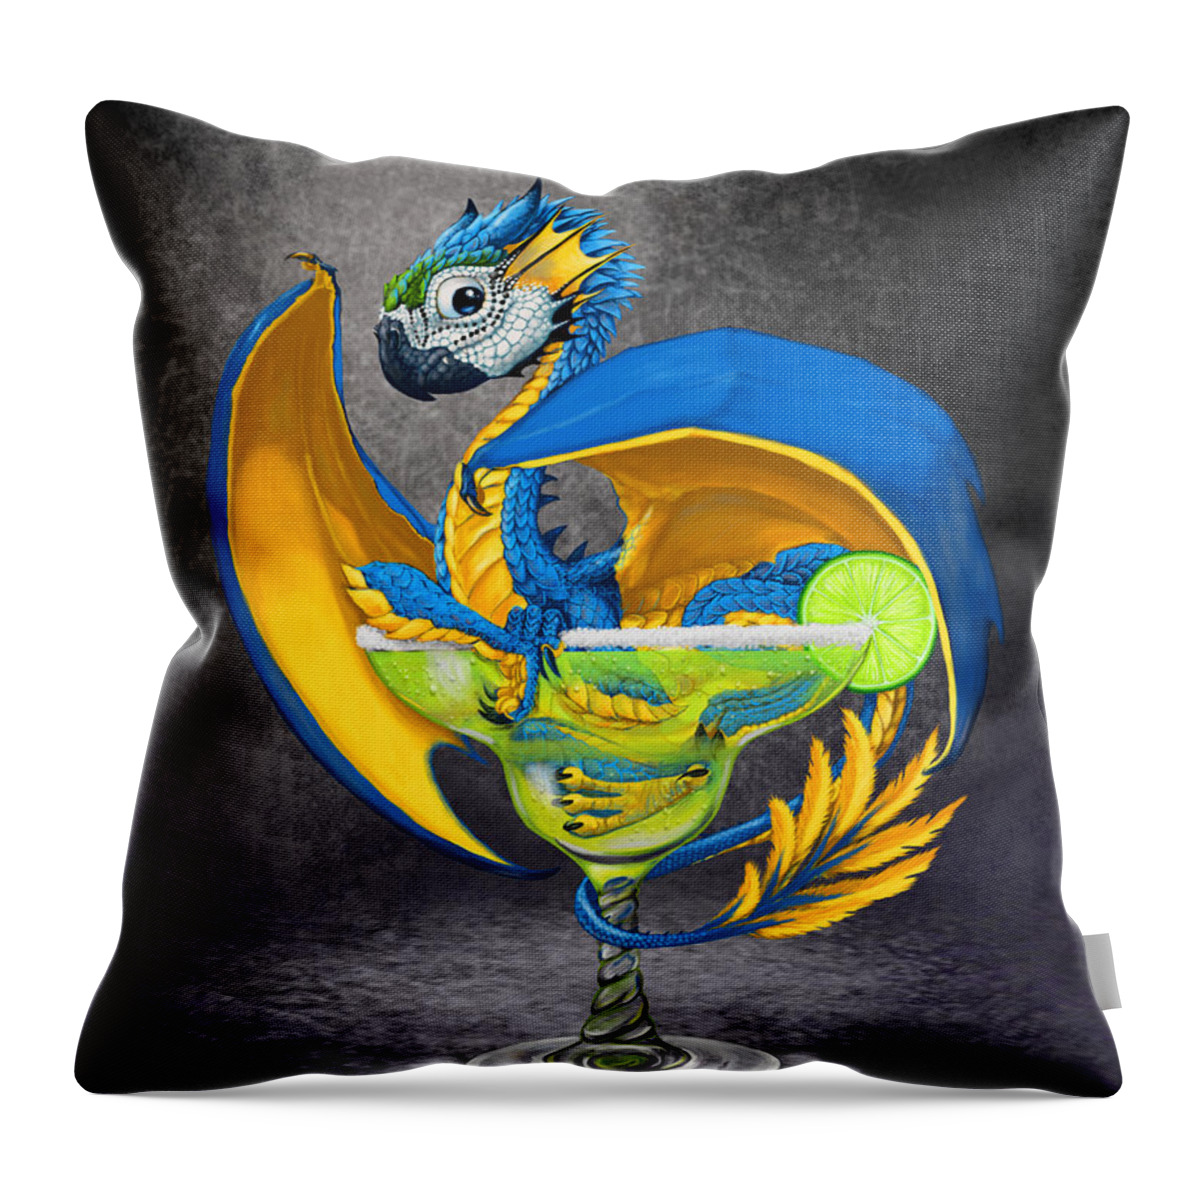 Margarita Throw Pillow featuring the digital art Margarita Dragon by Stanley Morrison